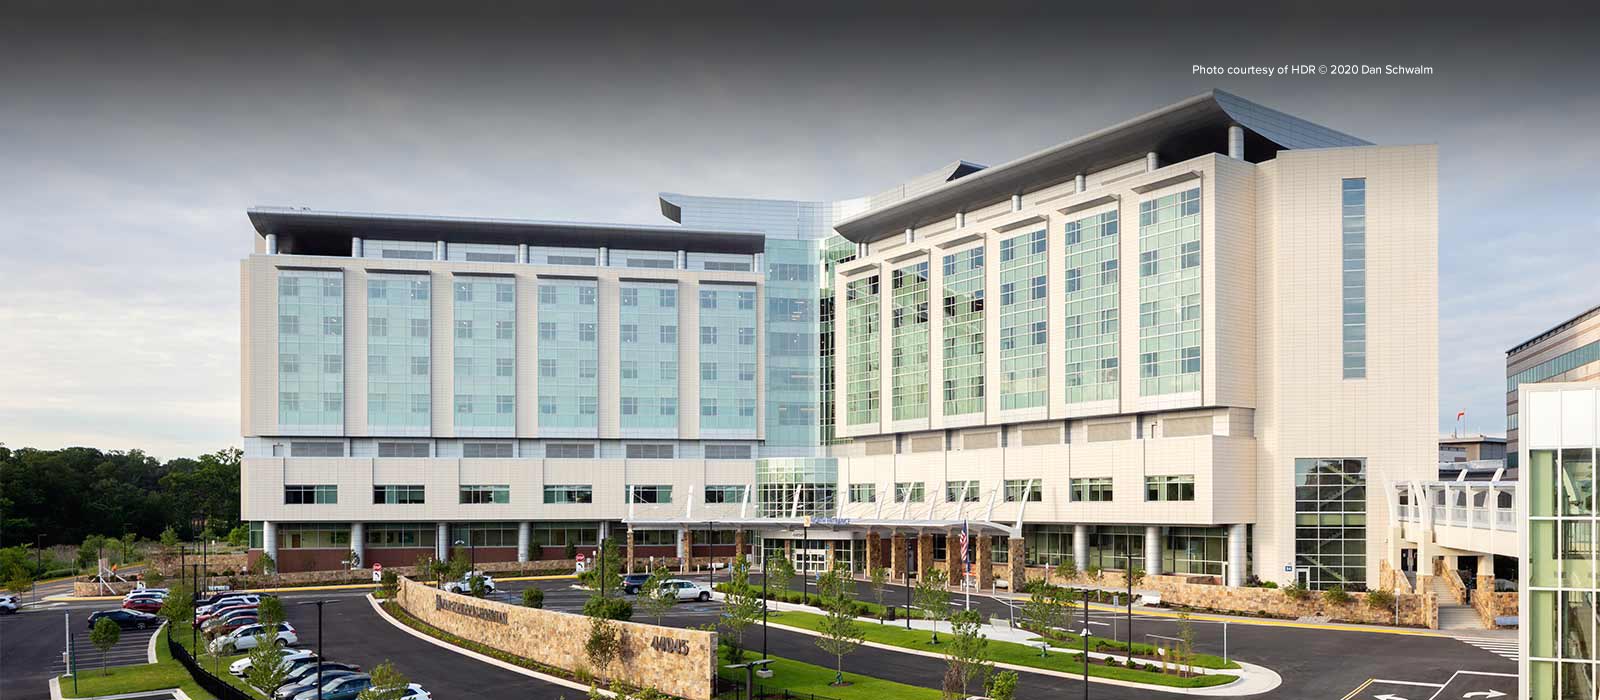 New Inova Loudoun Hospital campus.